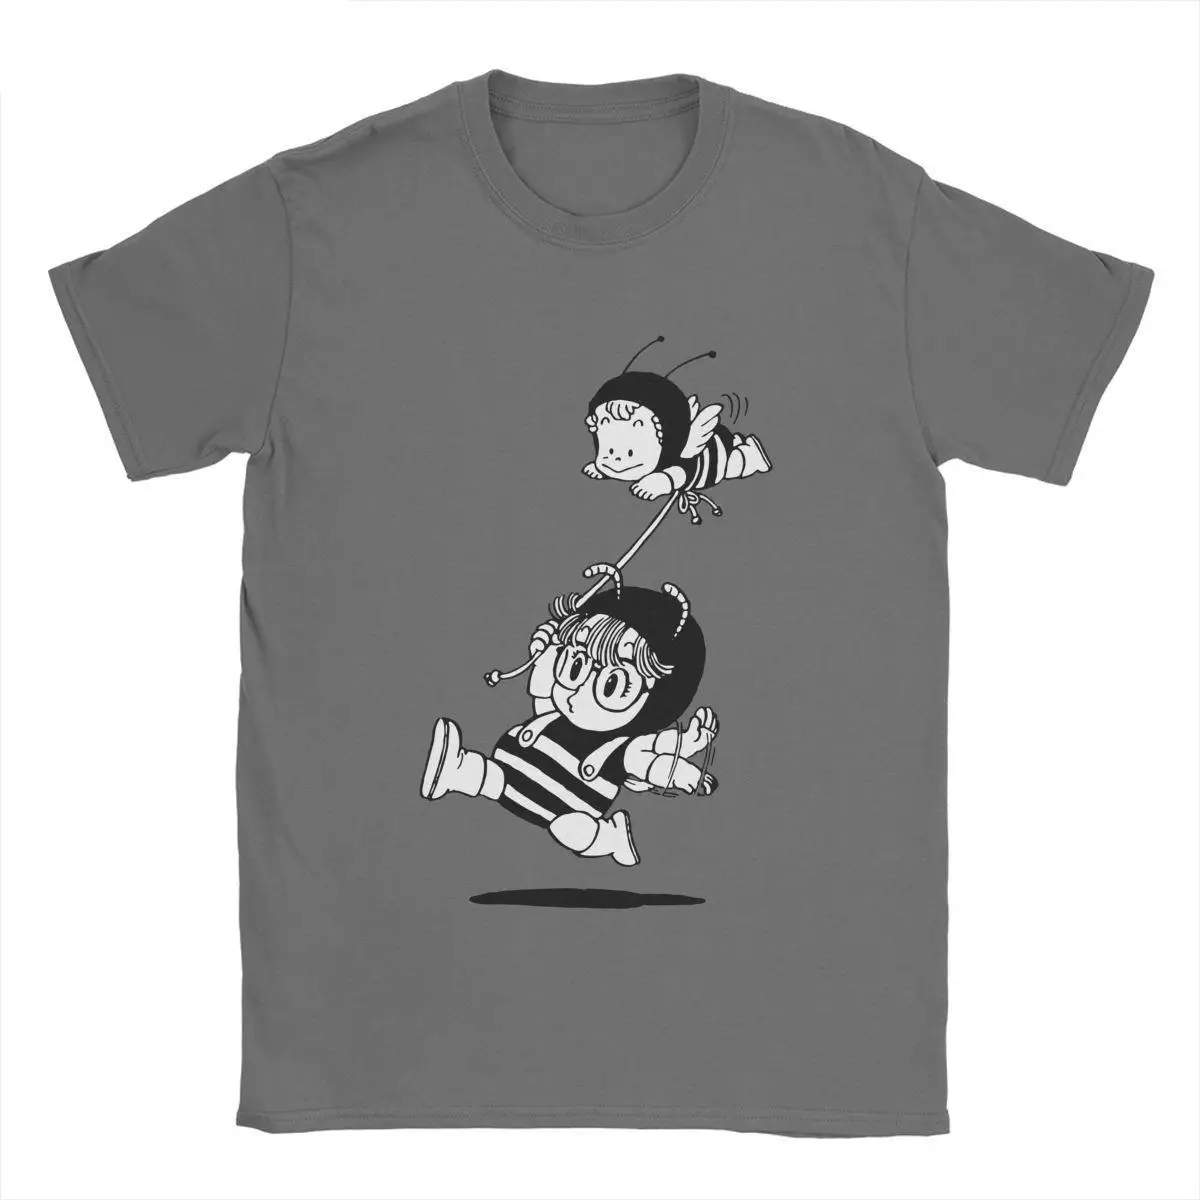 Arale Gachan Bees Dr Slump T Shirt for Men 100% Cotton Casual T-Shirts Round Neck Norimaki Tee Shirt Short Sleeve Clothing